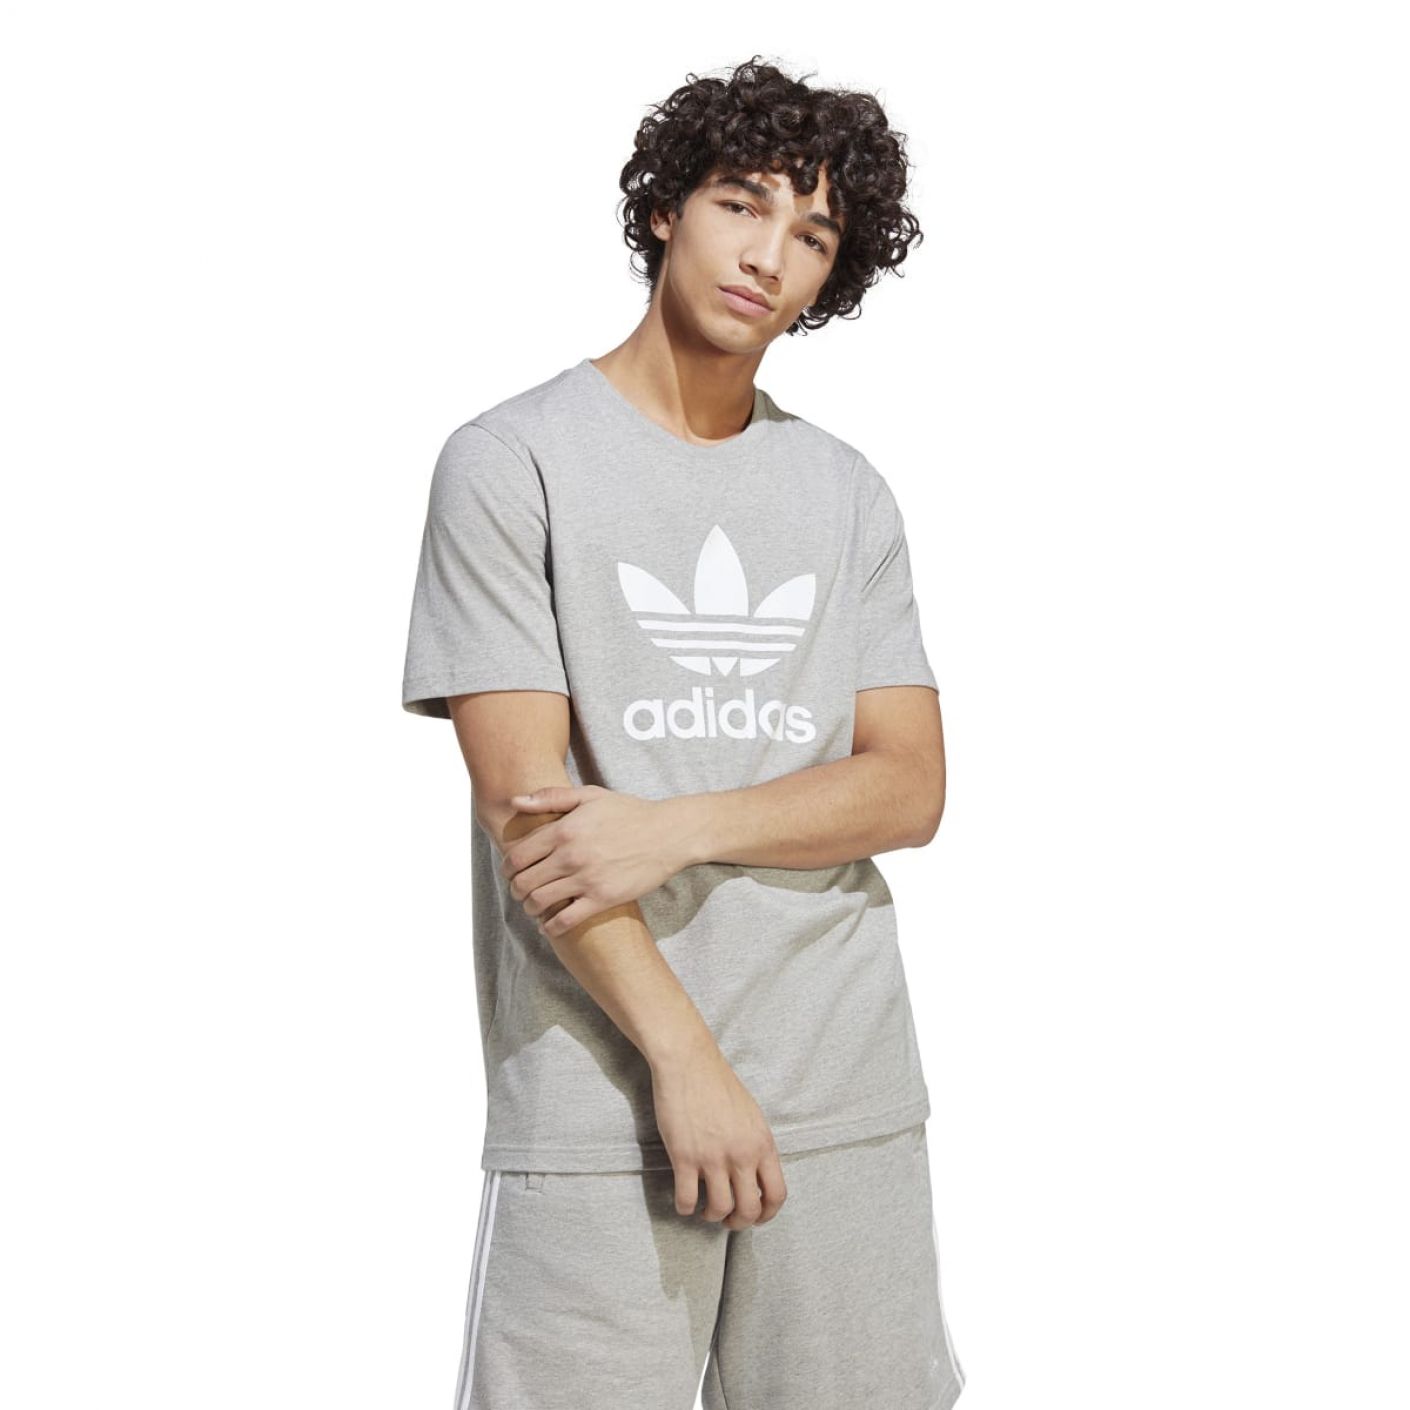 Adidas T-Shirt Trefoil Grigia